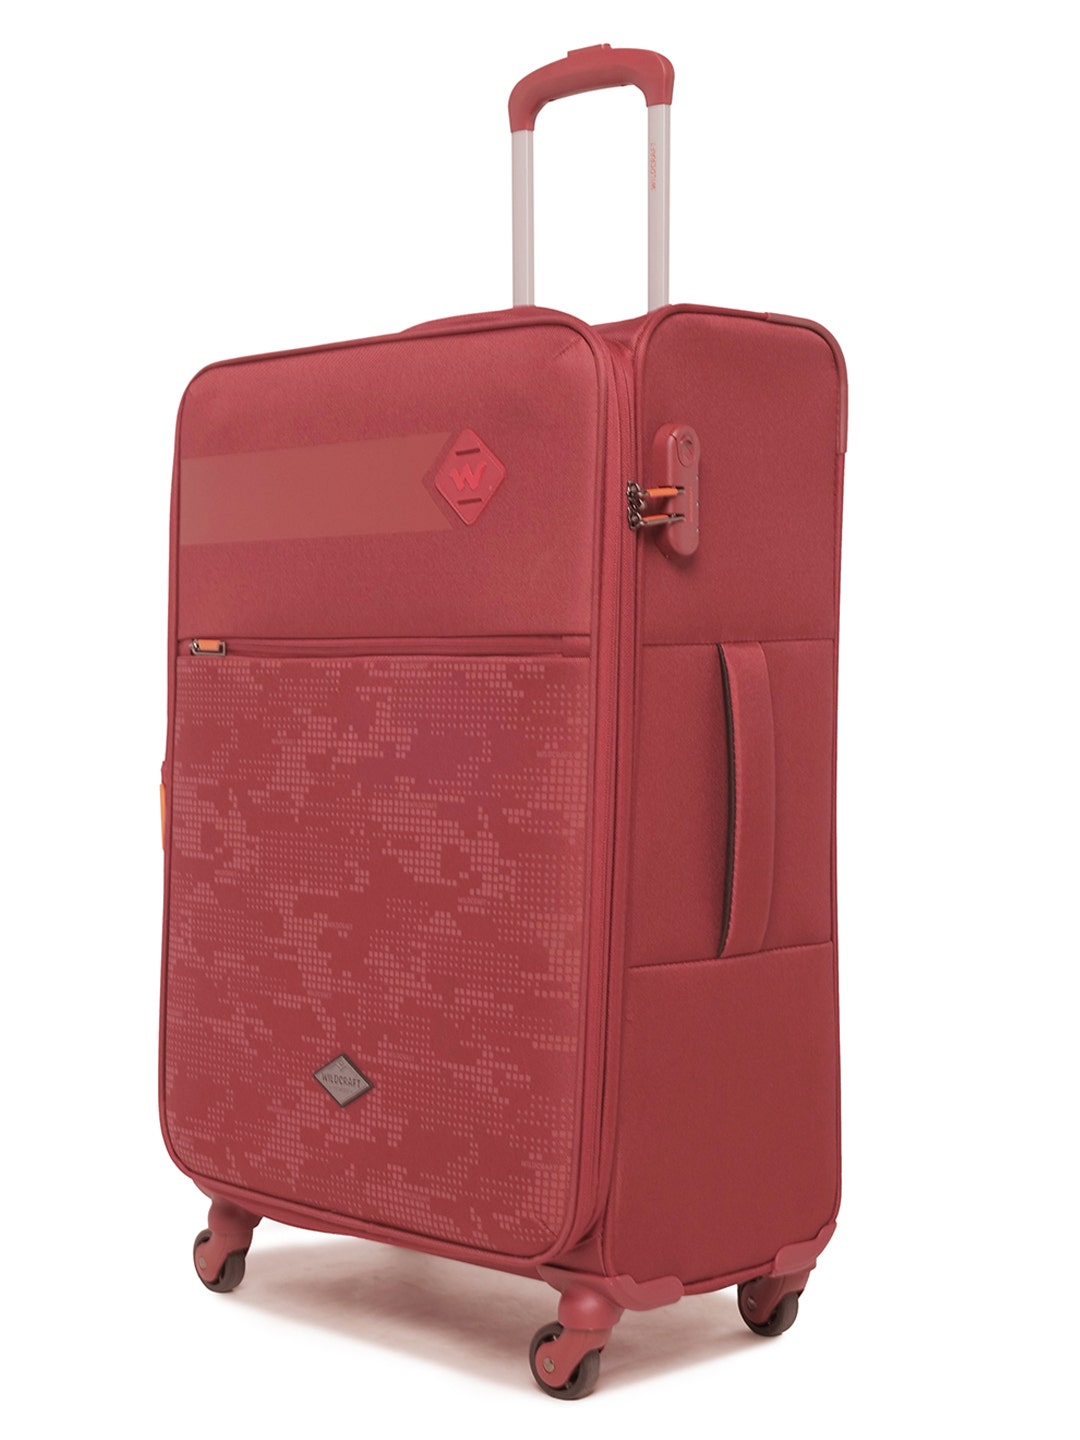 Wildcraft Dorado Soft Trolley Suitcase (12852)